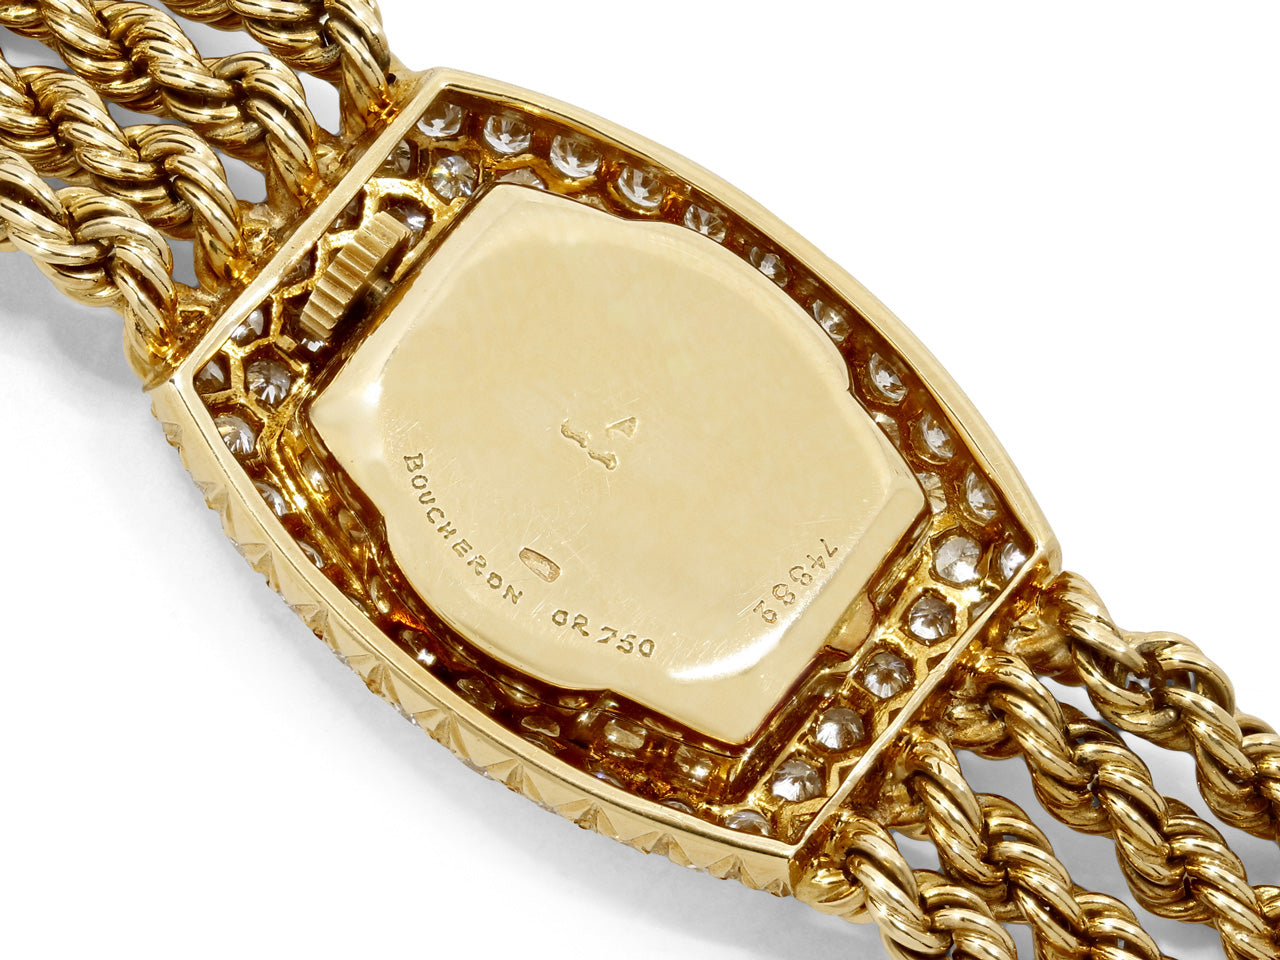 Boucheron Diamond Watch in 18K Gold